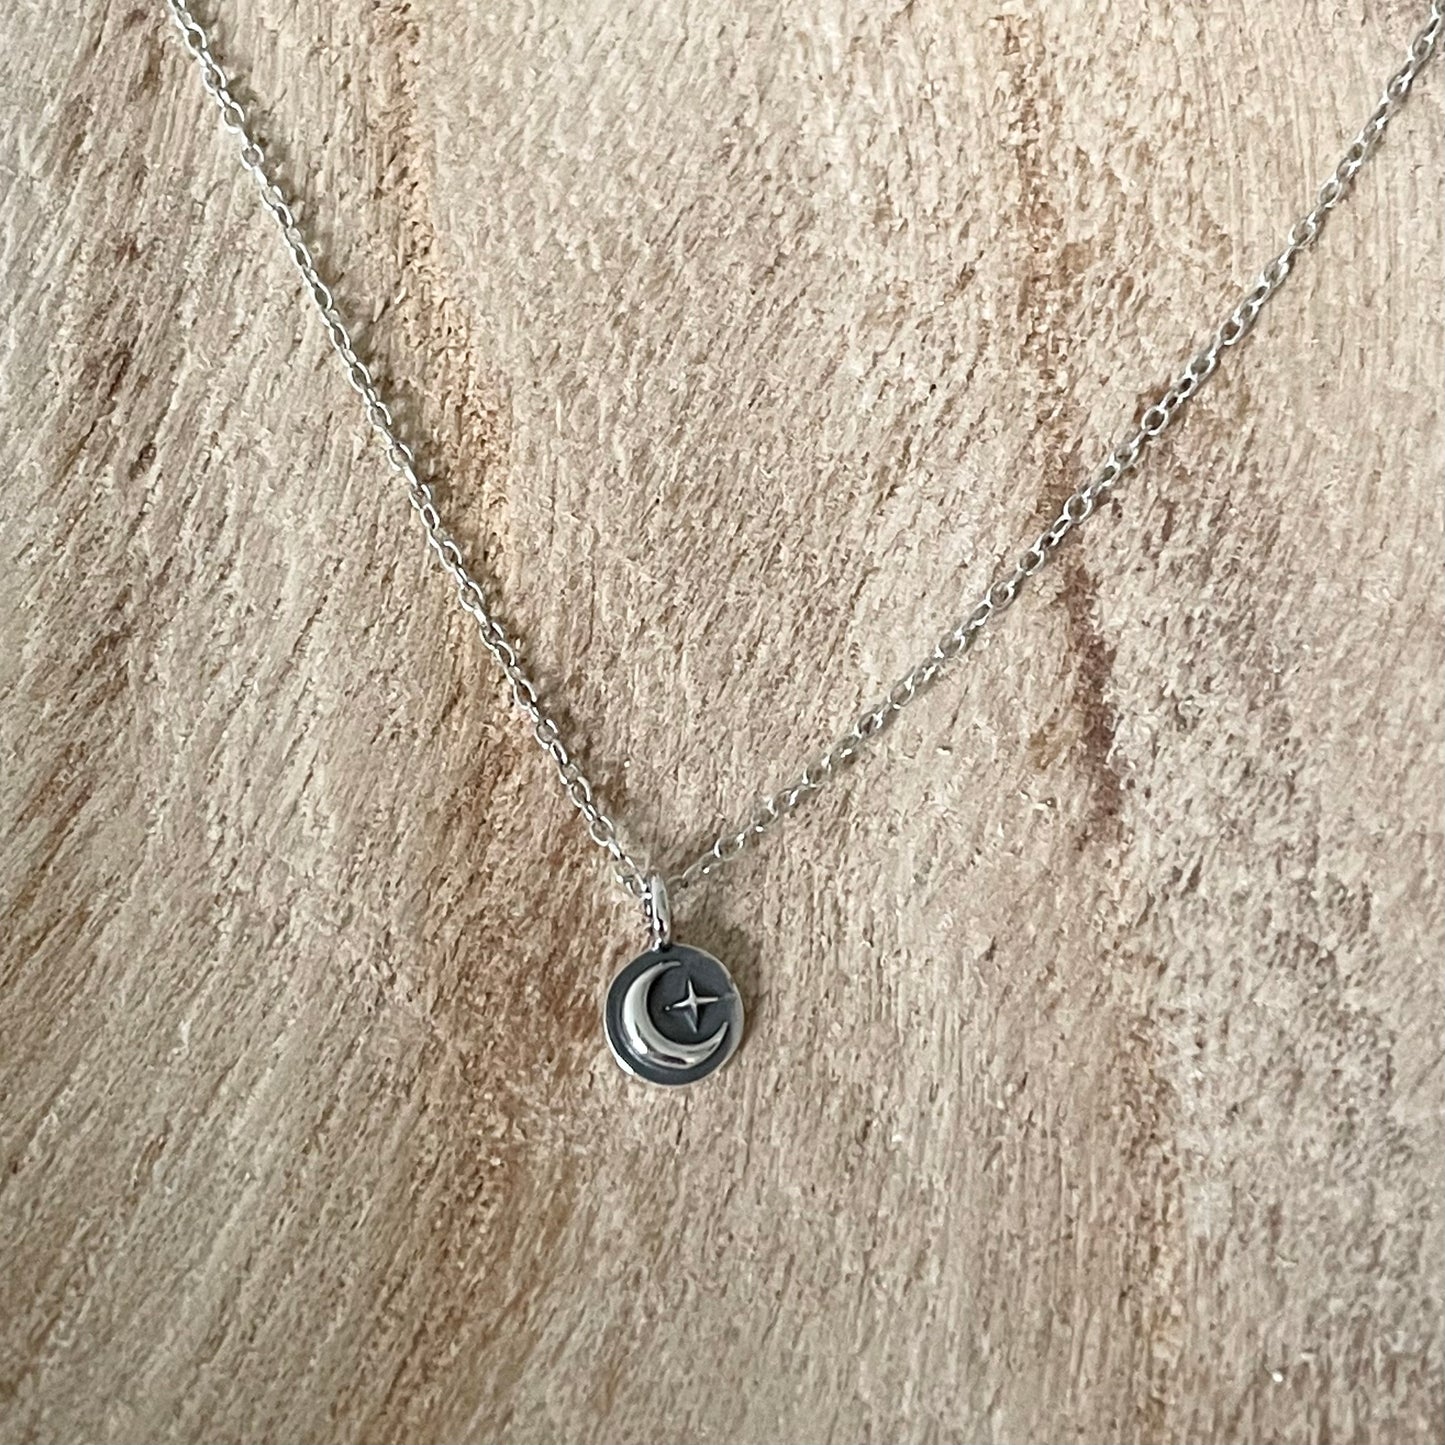 Mini Star Moon Silver Necklace